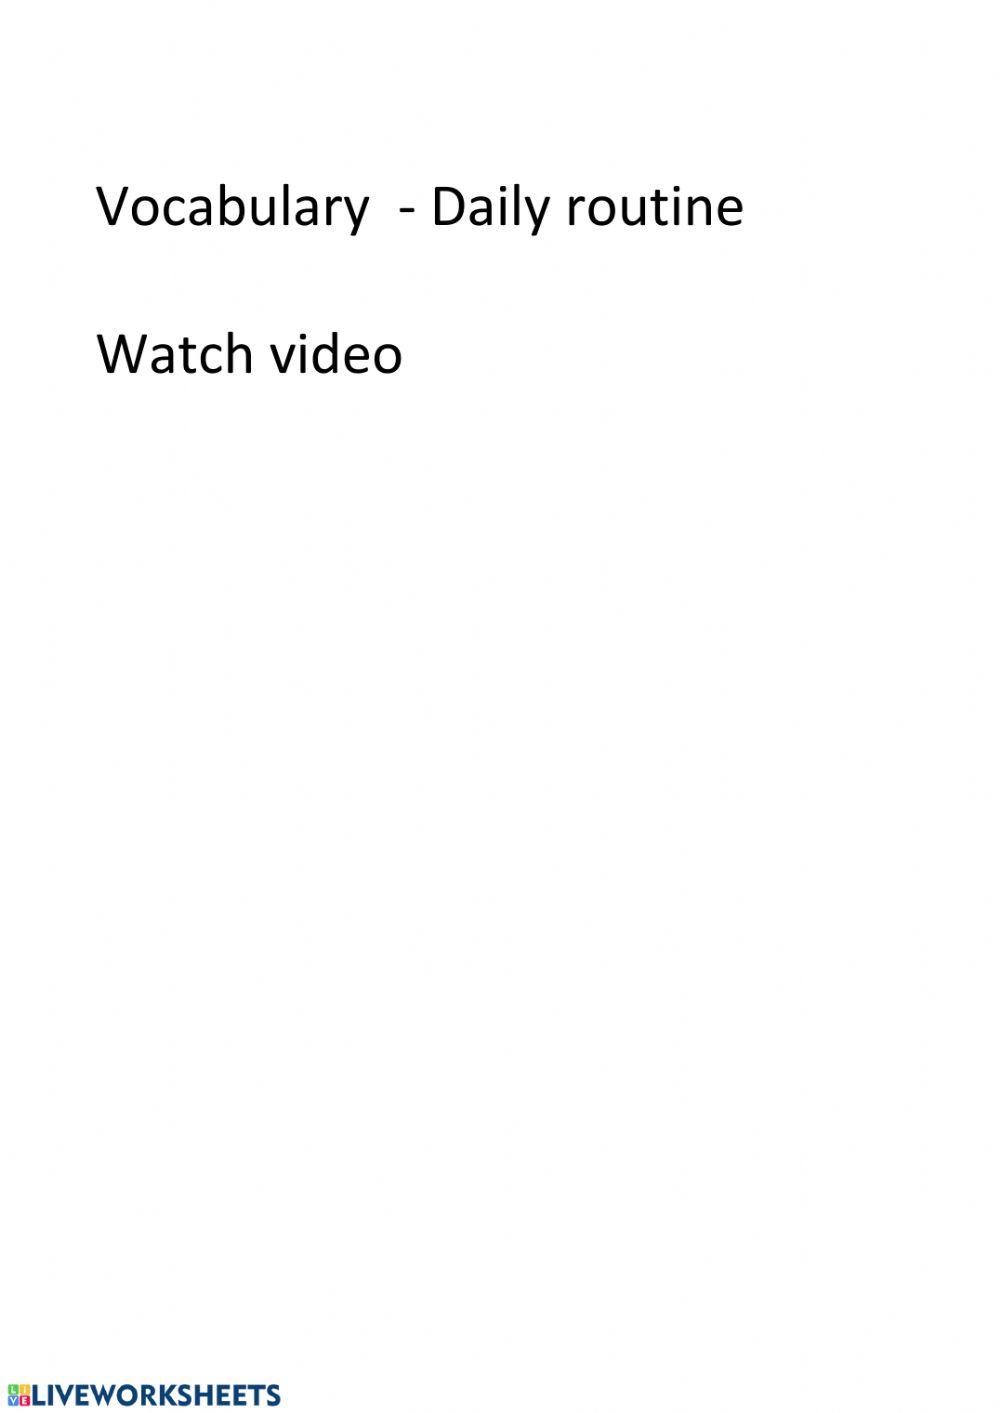 Daily routine verbs